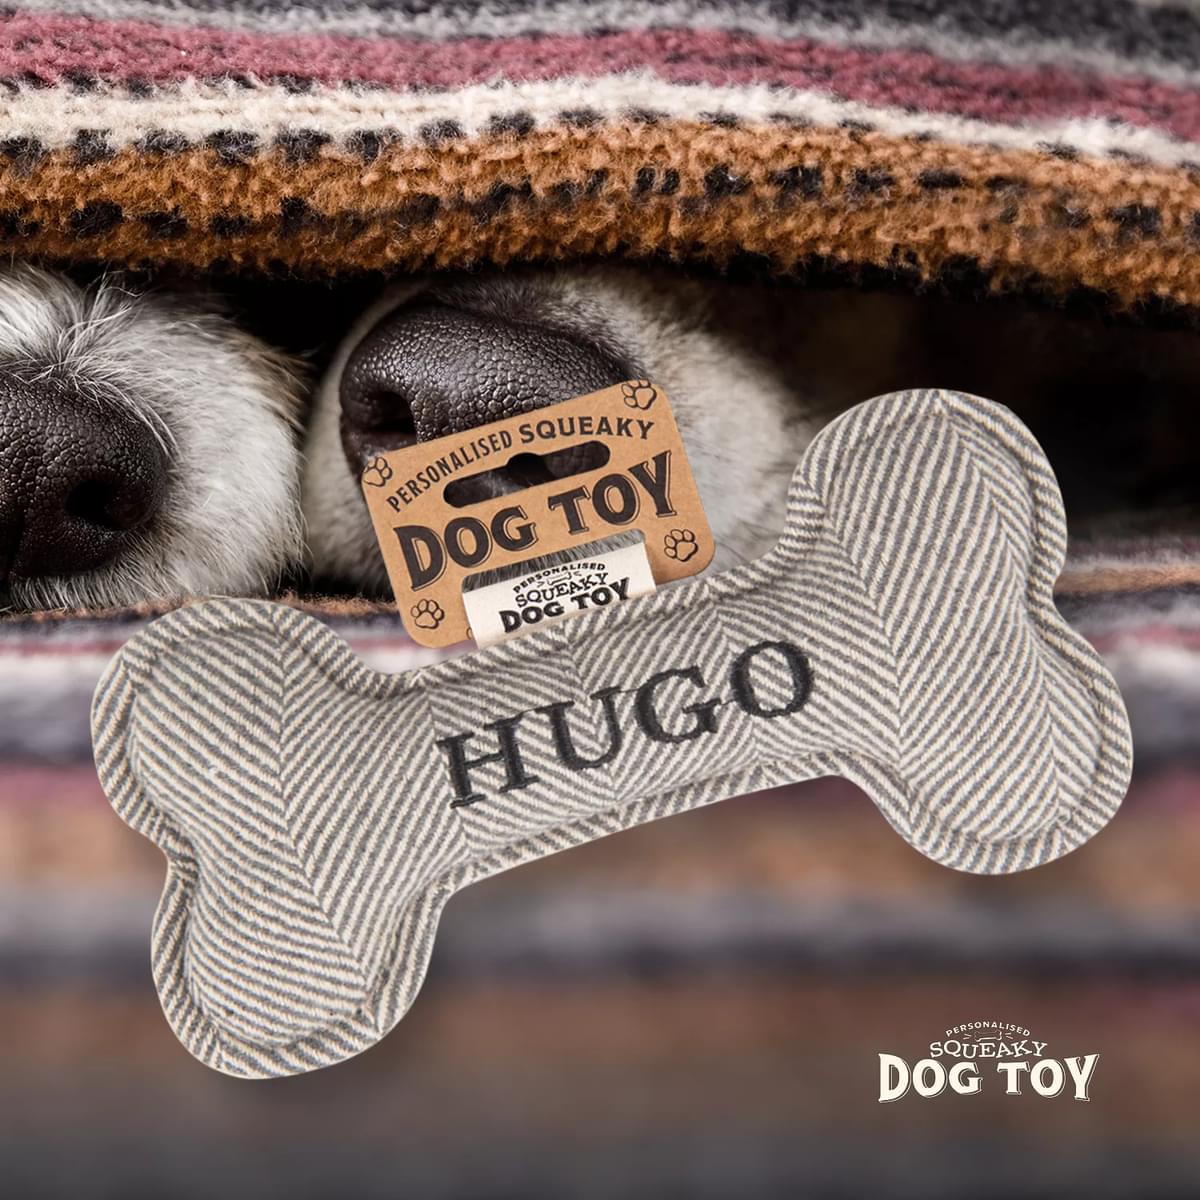 Named Squeaky Dog Toy- Hugo. Bone shaped herringbone tweed pattern dog toy. 